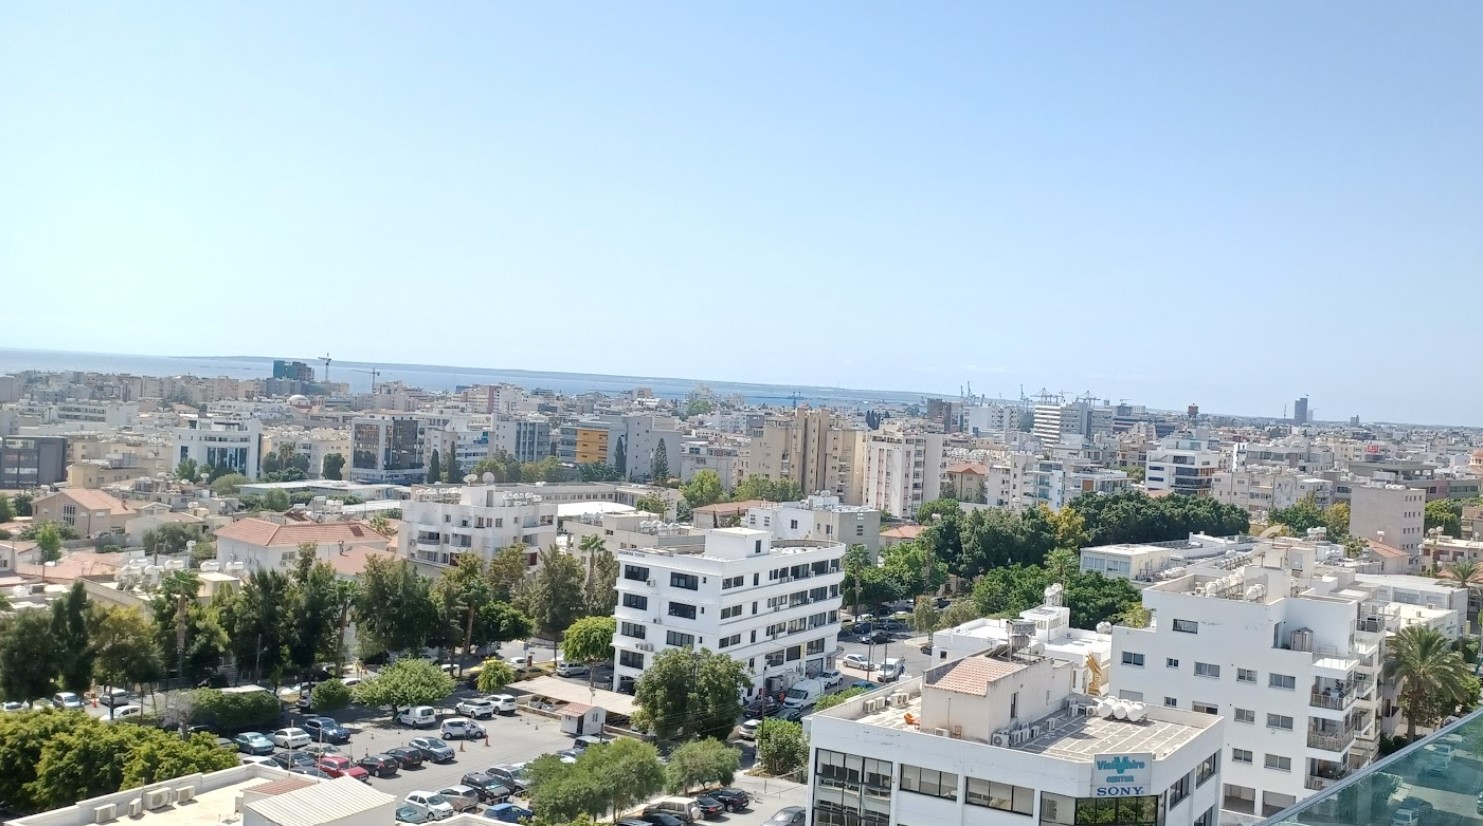 image Vast majority of Limassol buildings in earthquake zone